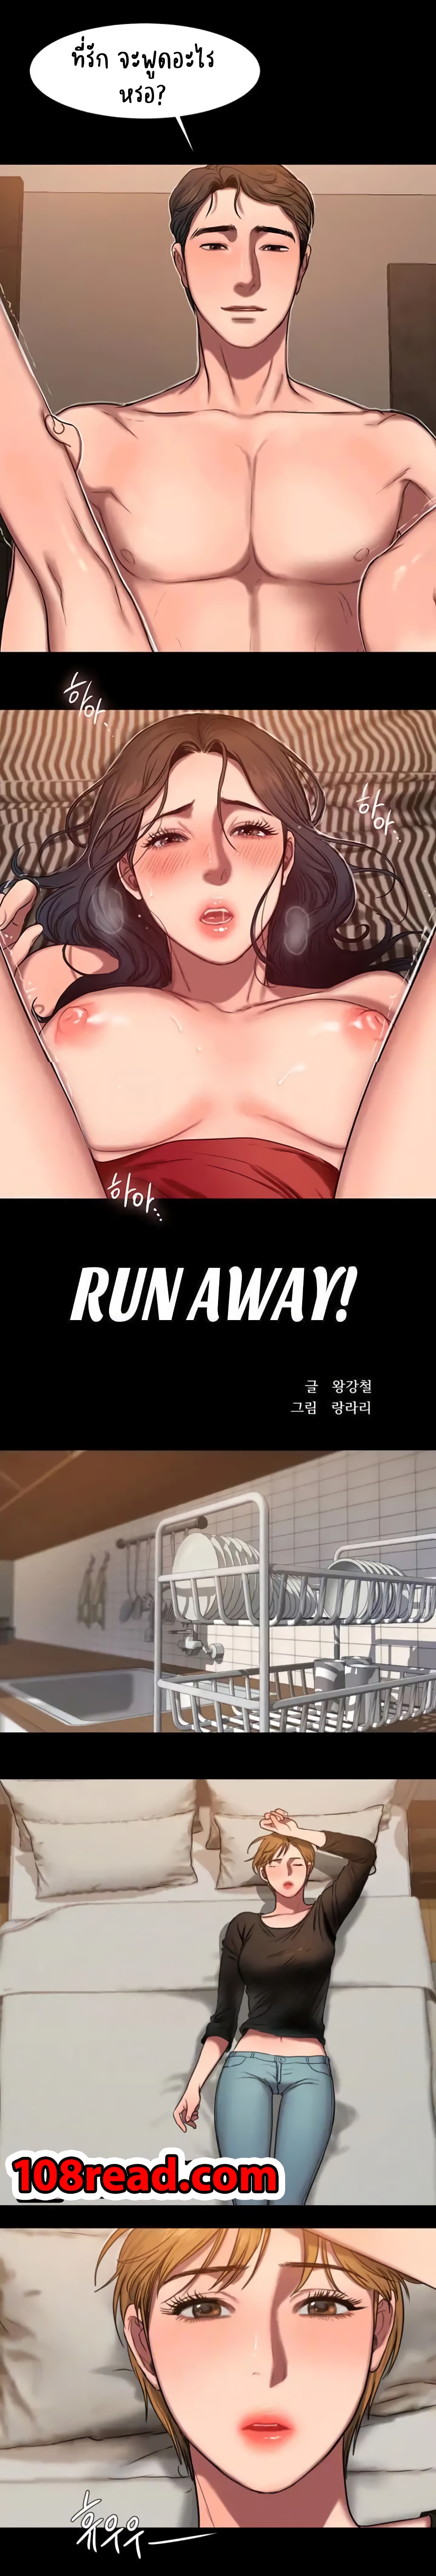 Run away 8 (2)